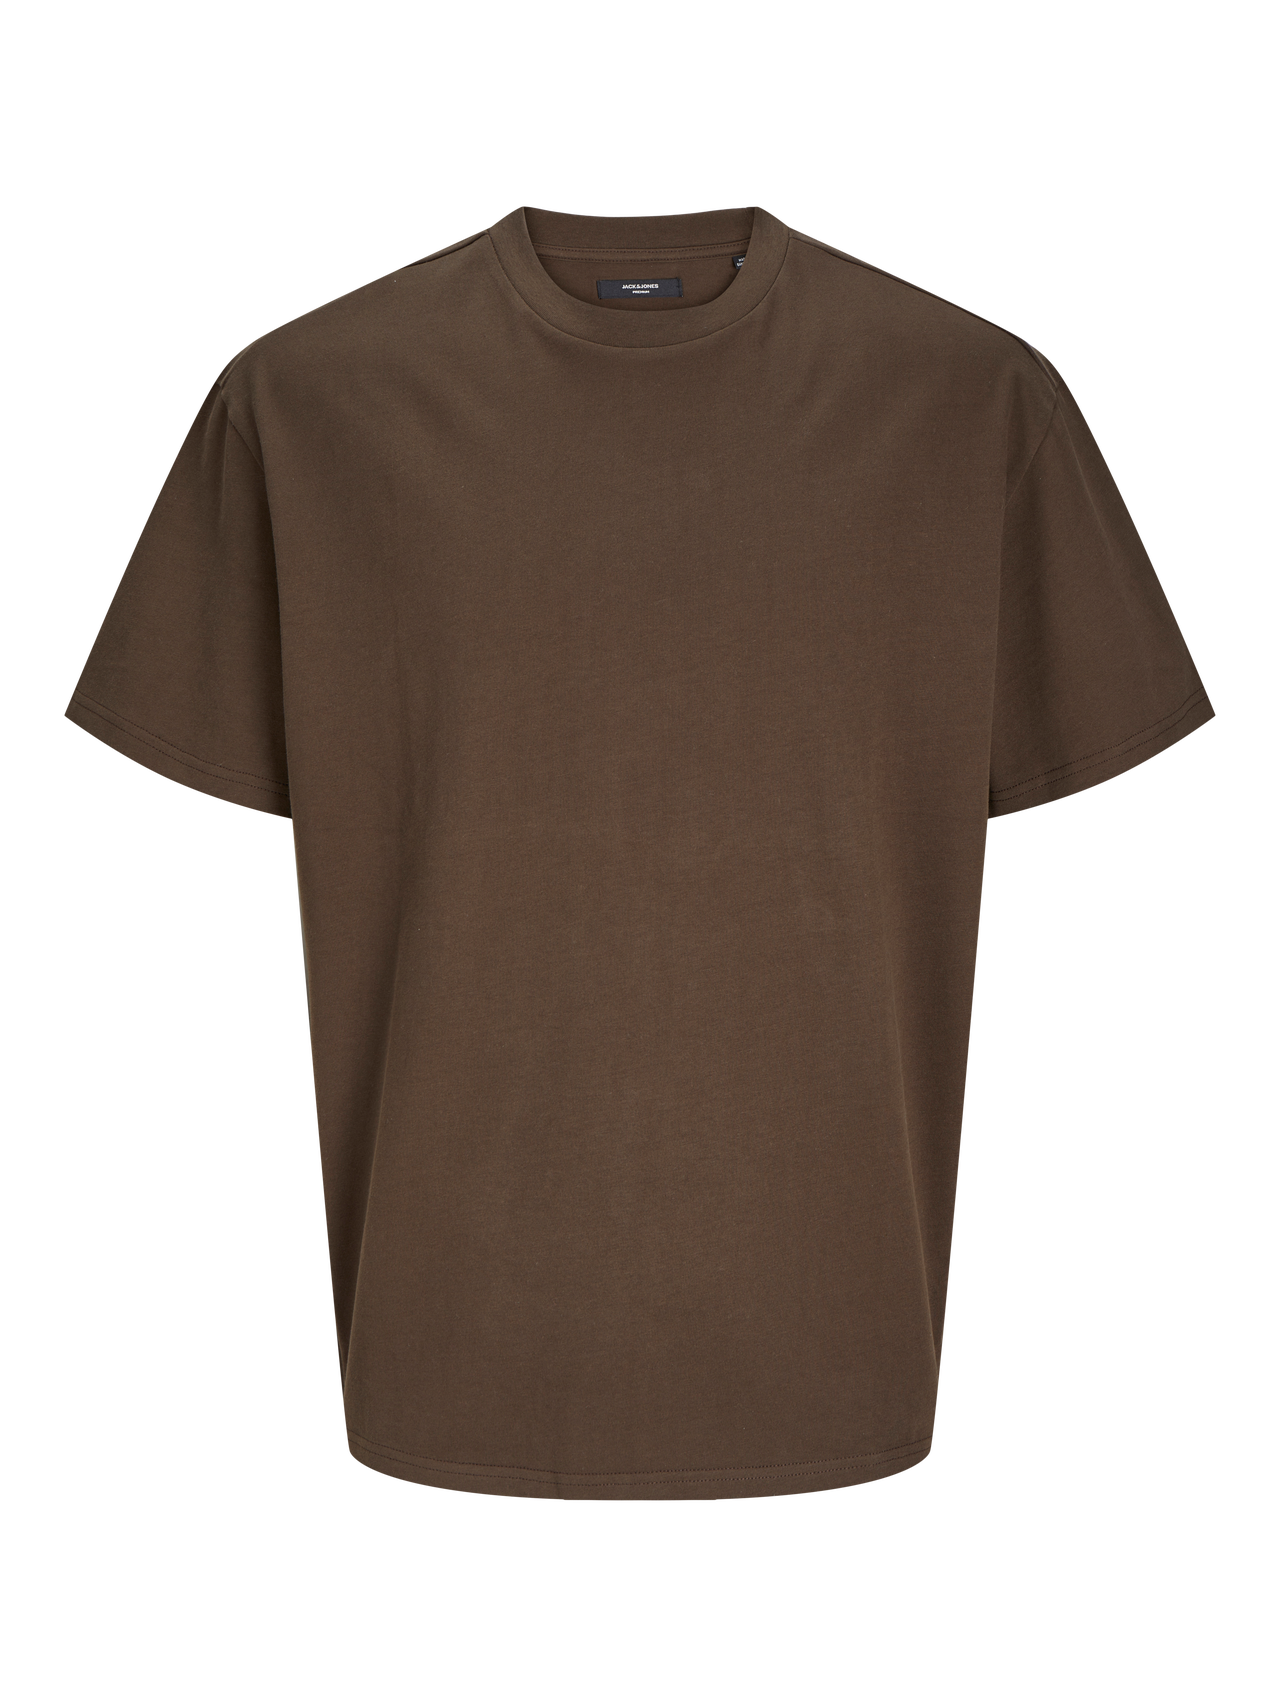 Jack & Jones Καλοκαιρινό μπλουζάκι -Chocolate Brown - 12255176